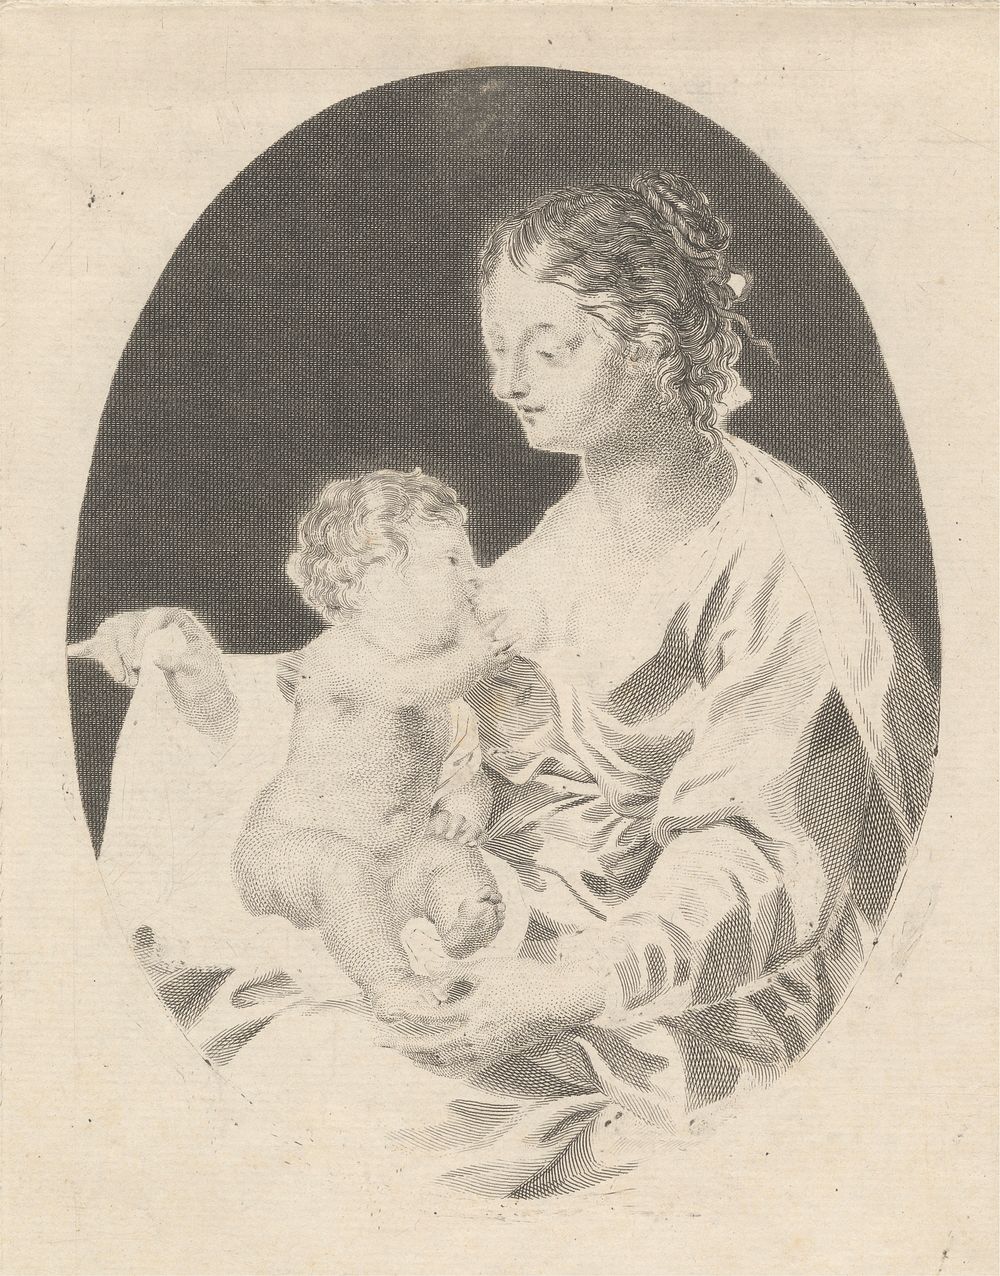 The Virgin and Child by Francesco Bartolozzi